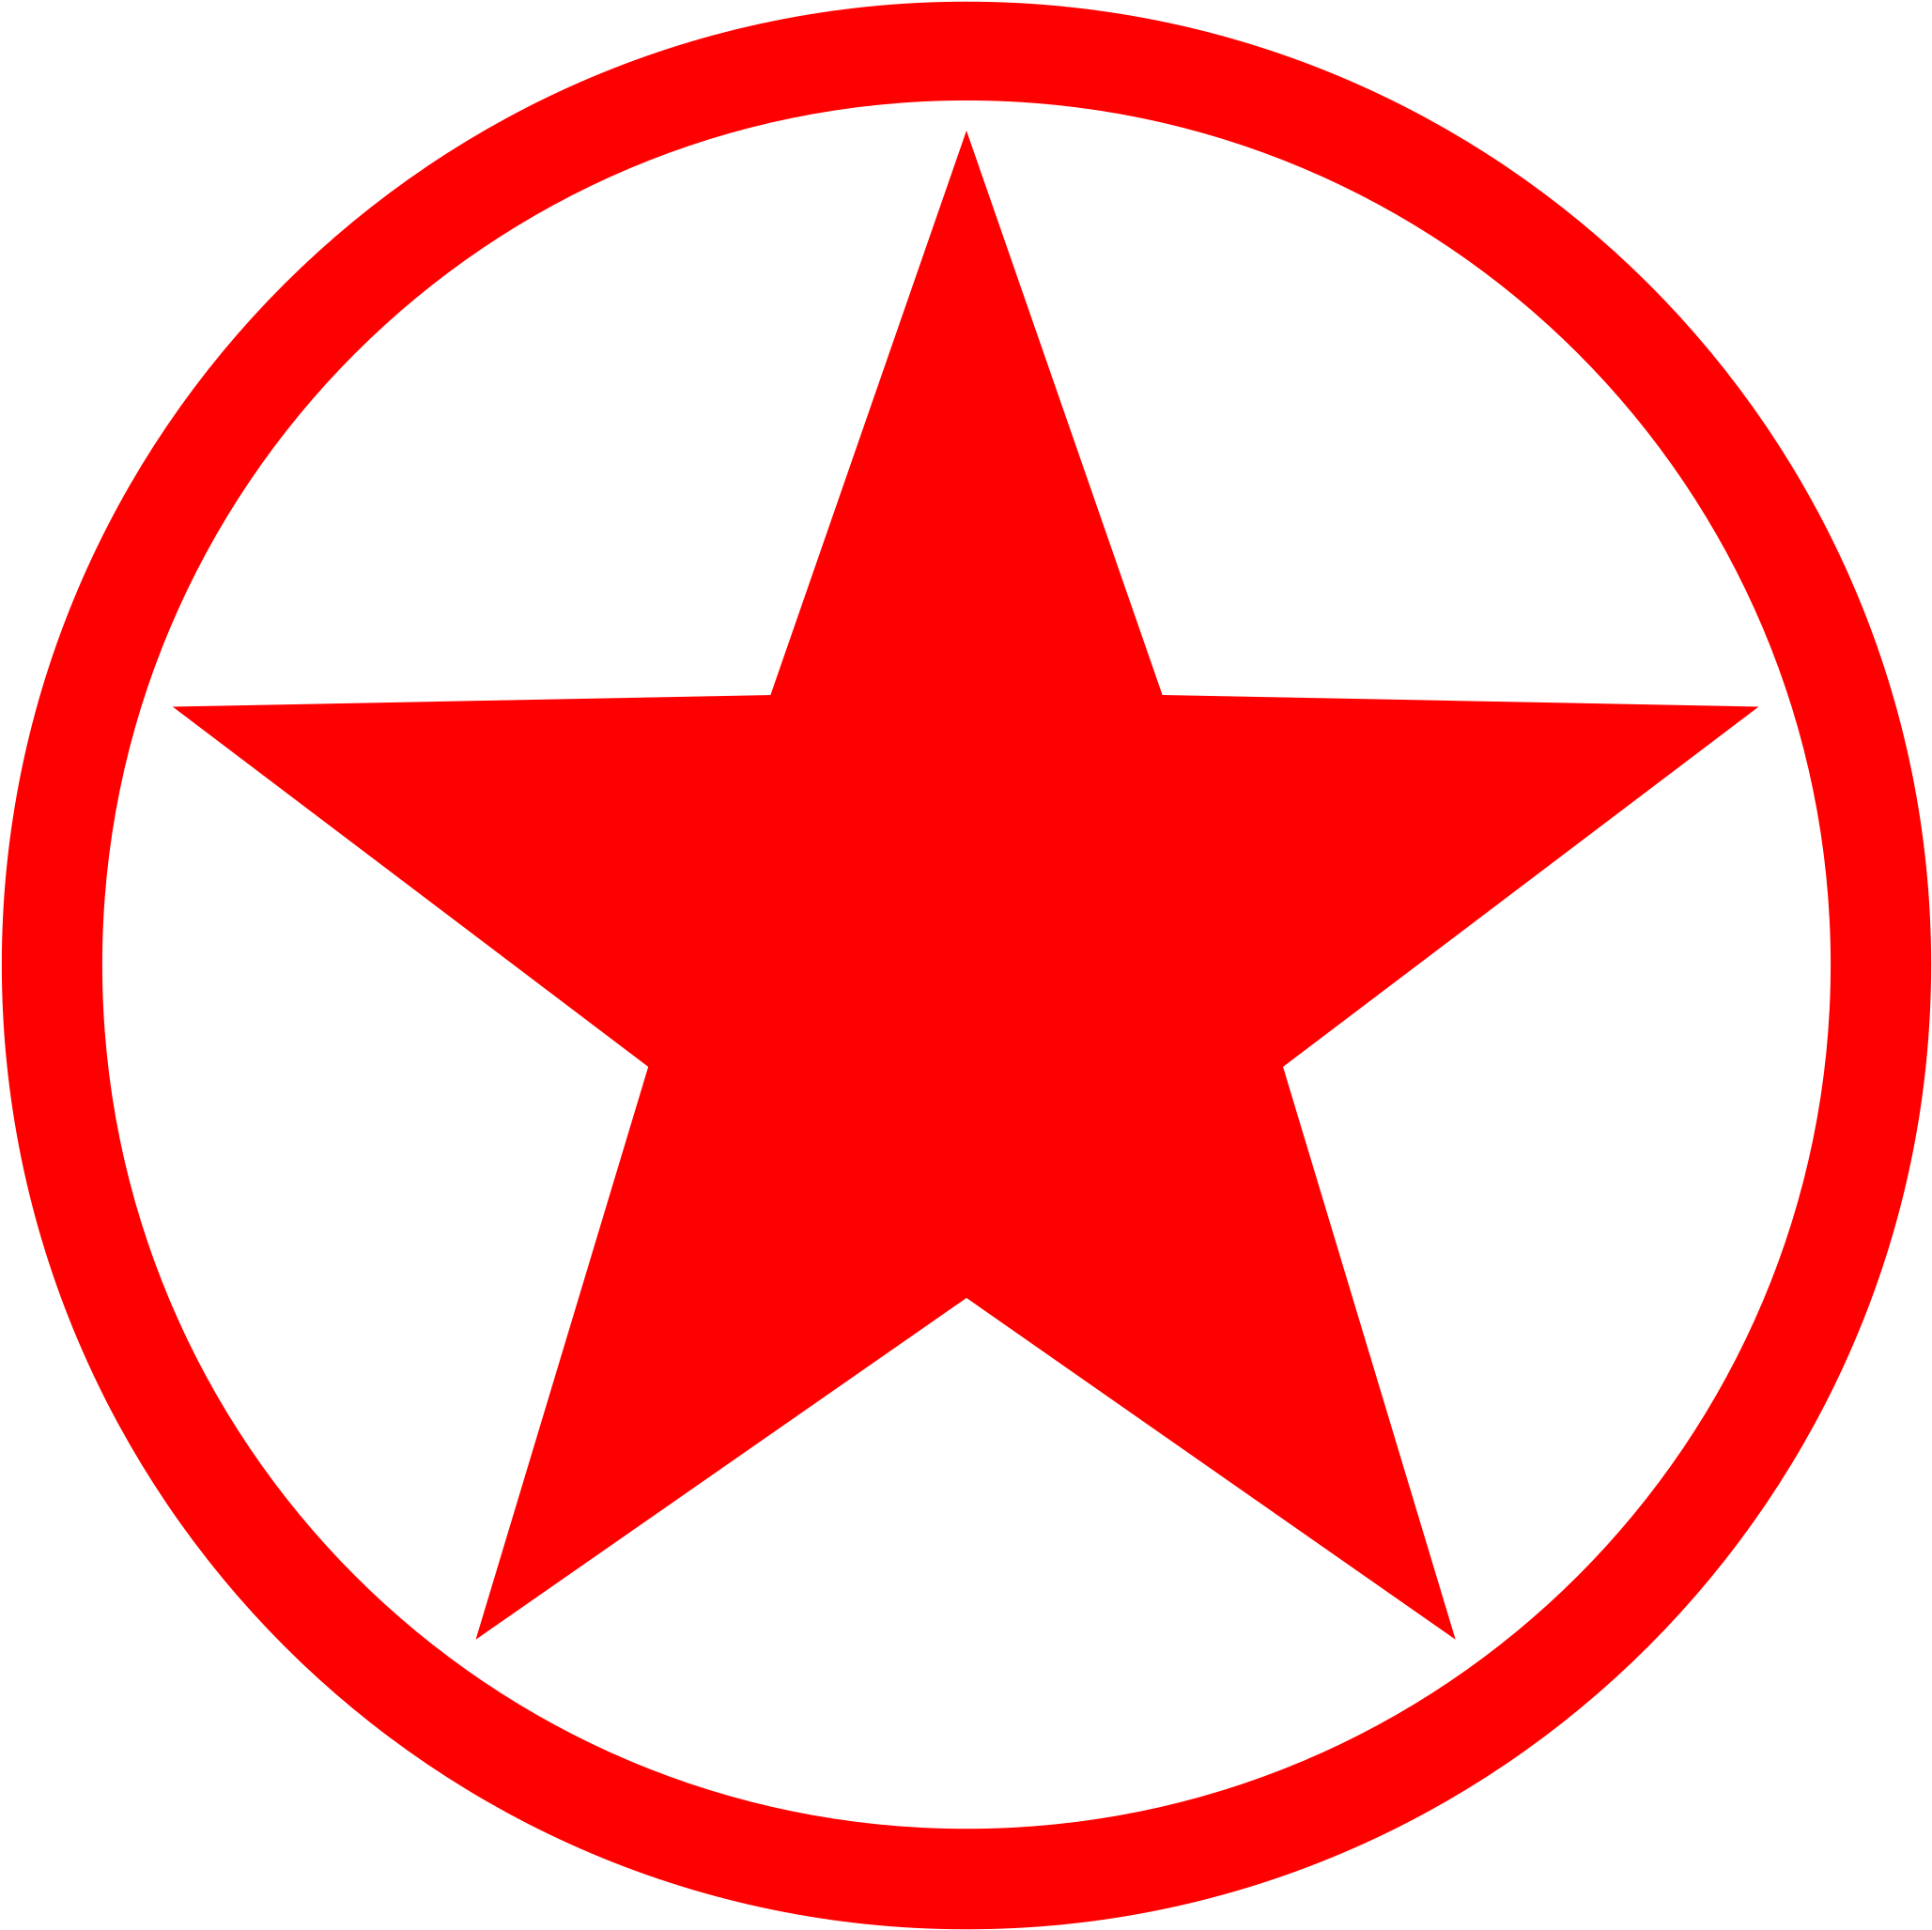 Круг внутри звезда. Звезда в круге. Значок Звездочка. Звезда в круге символ. Эмблема красная звезда.